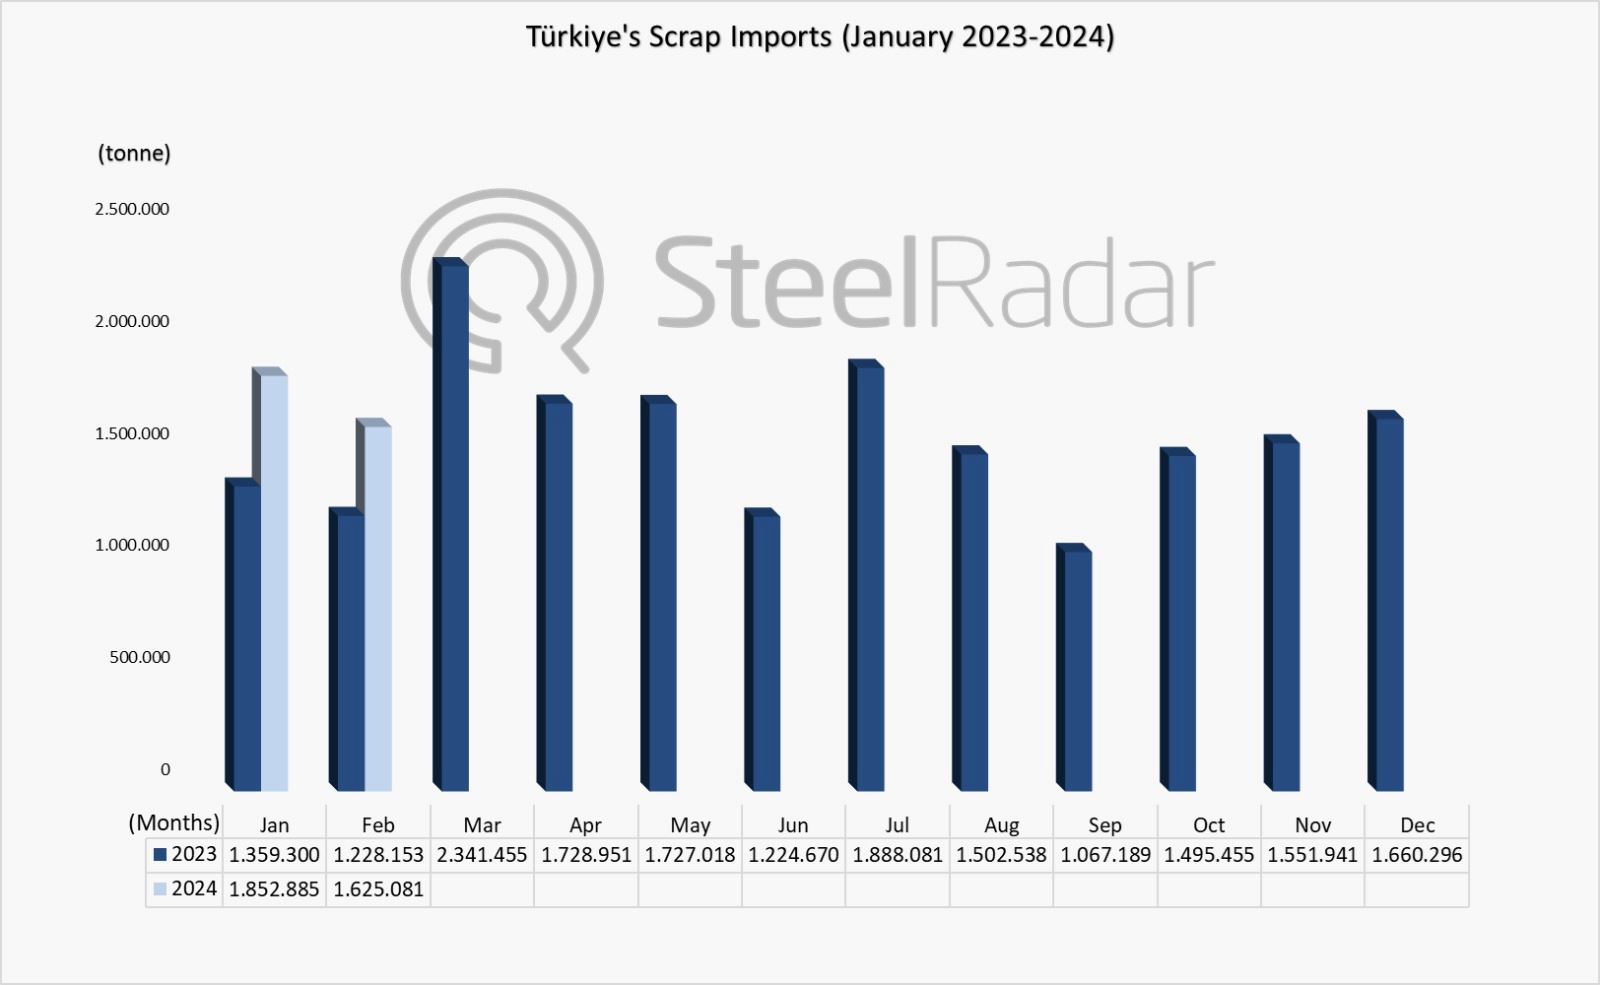 Scrap imports of Türkiye increased by 32.4% in February